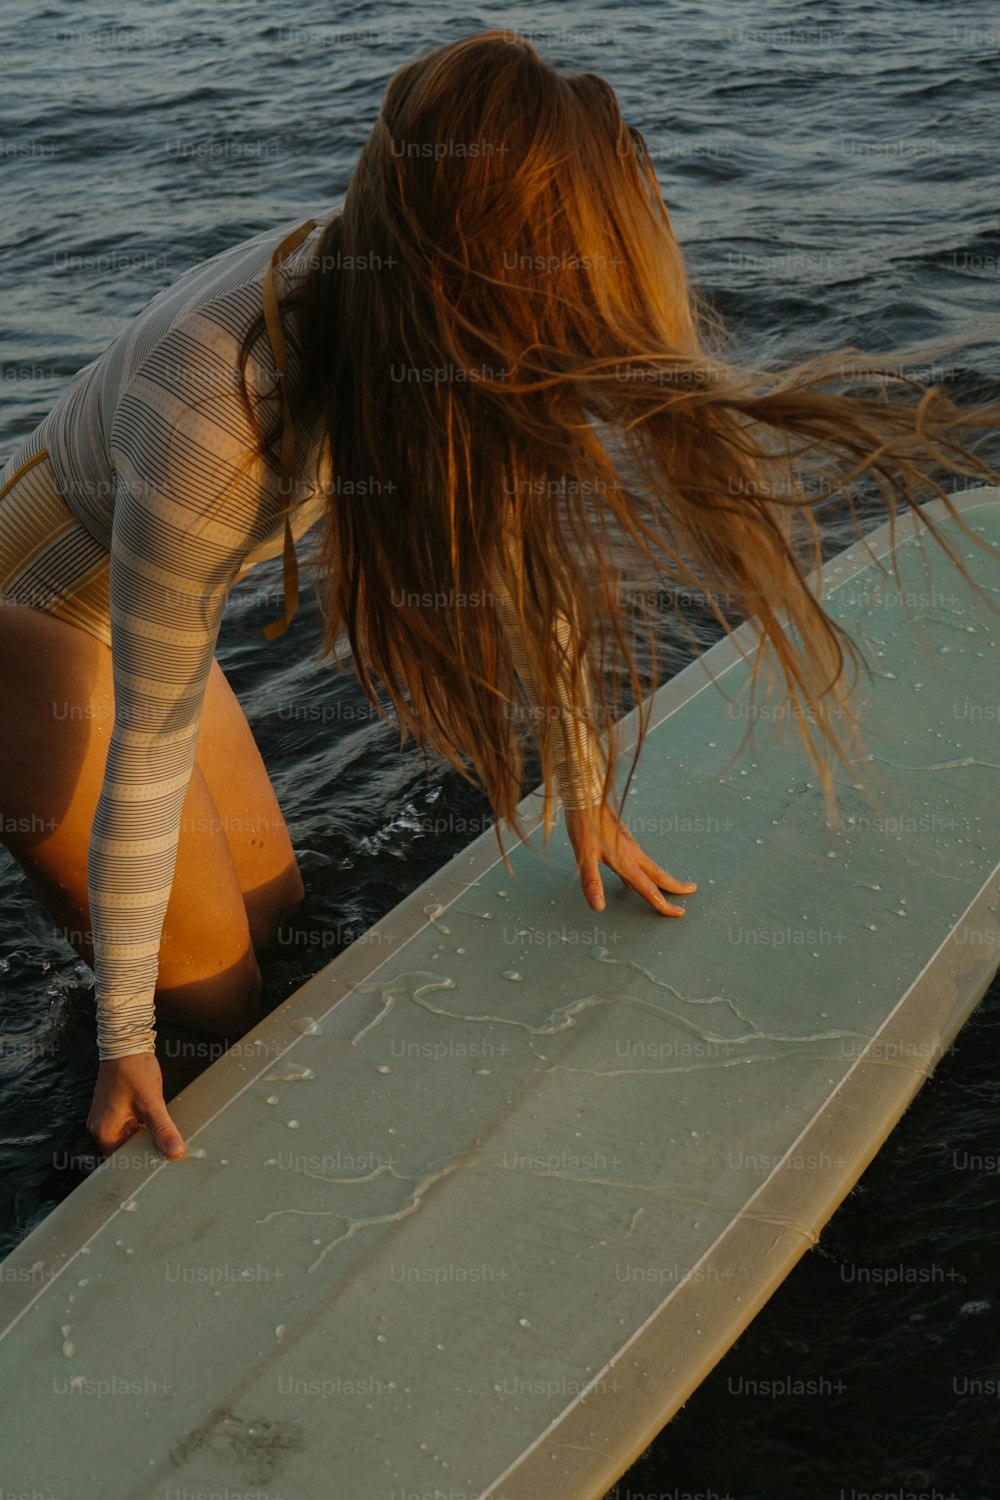 a woman kneeling on a surfboard in the water